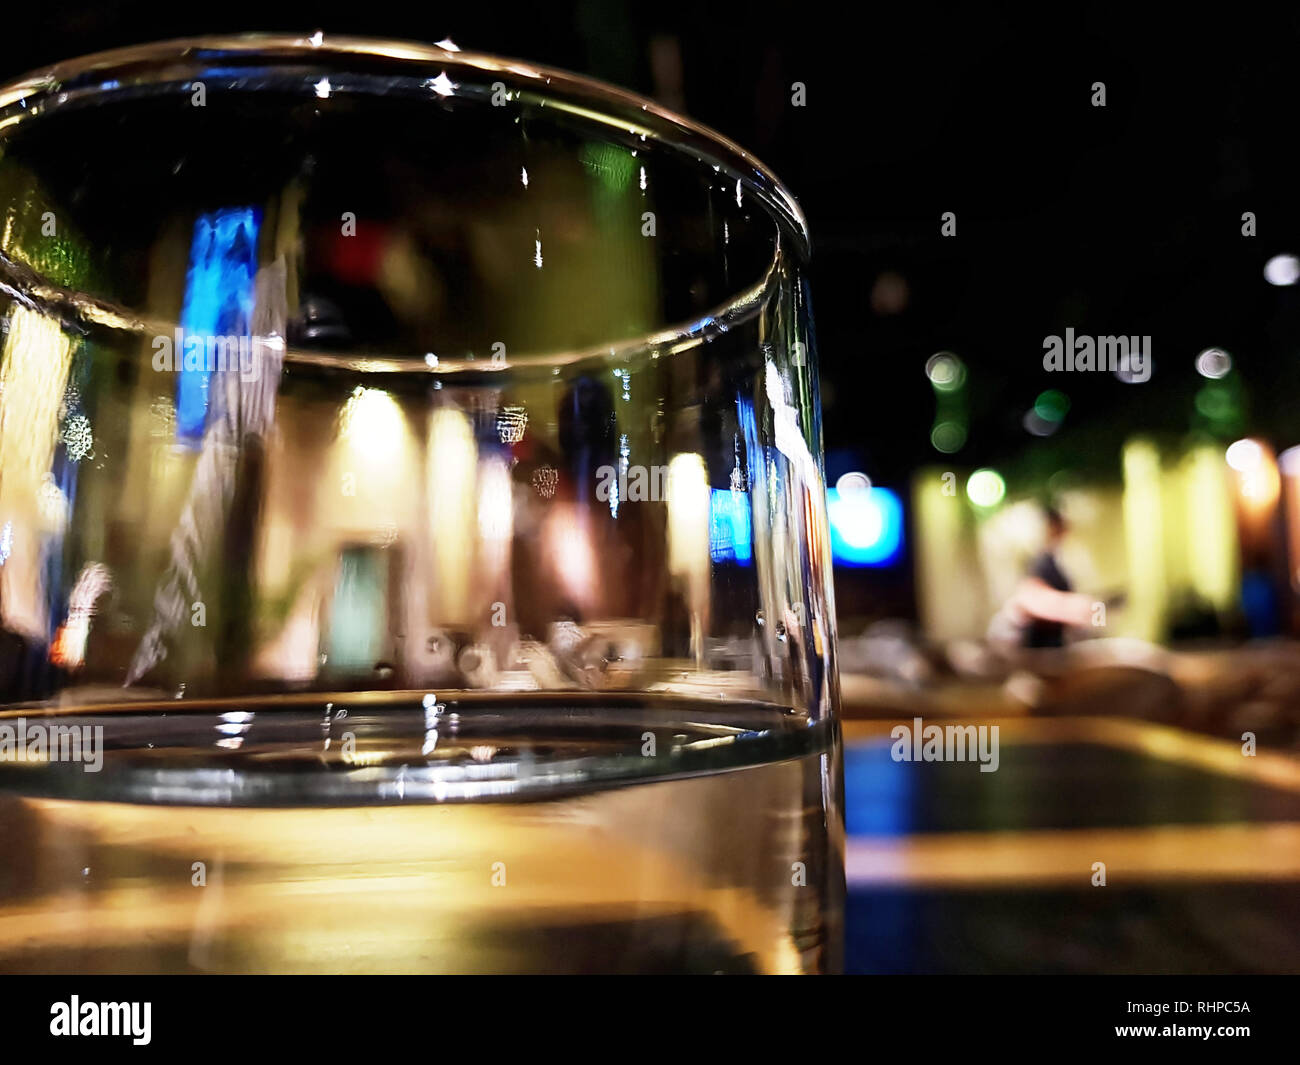 Cerrar vista a través de un vaso de agua o vino en un restaurante, con  luces borrosa en el fondo Fotografía de stock - Alamy